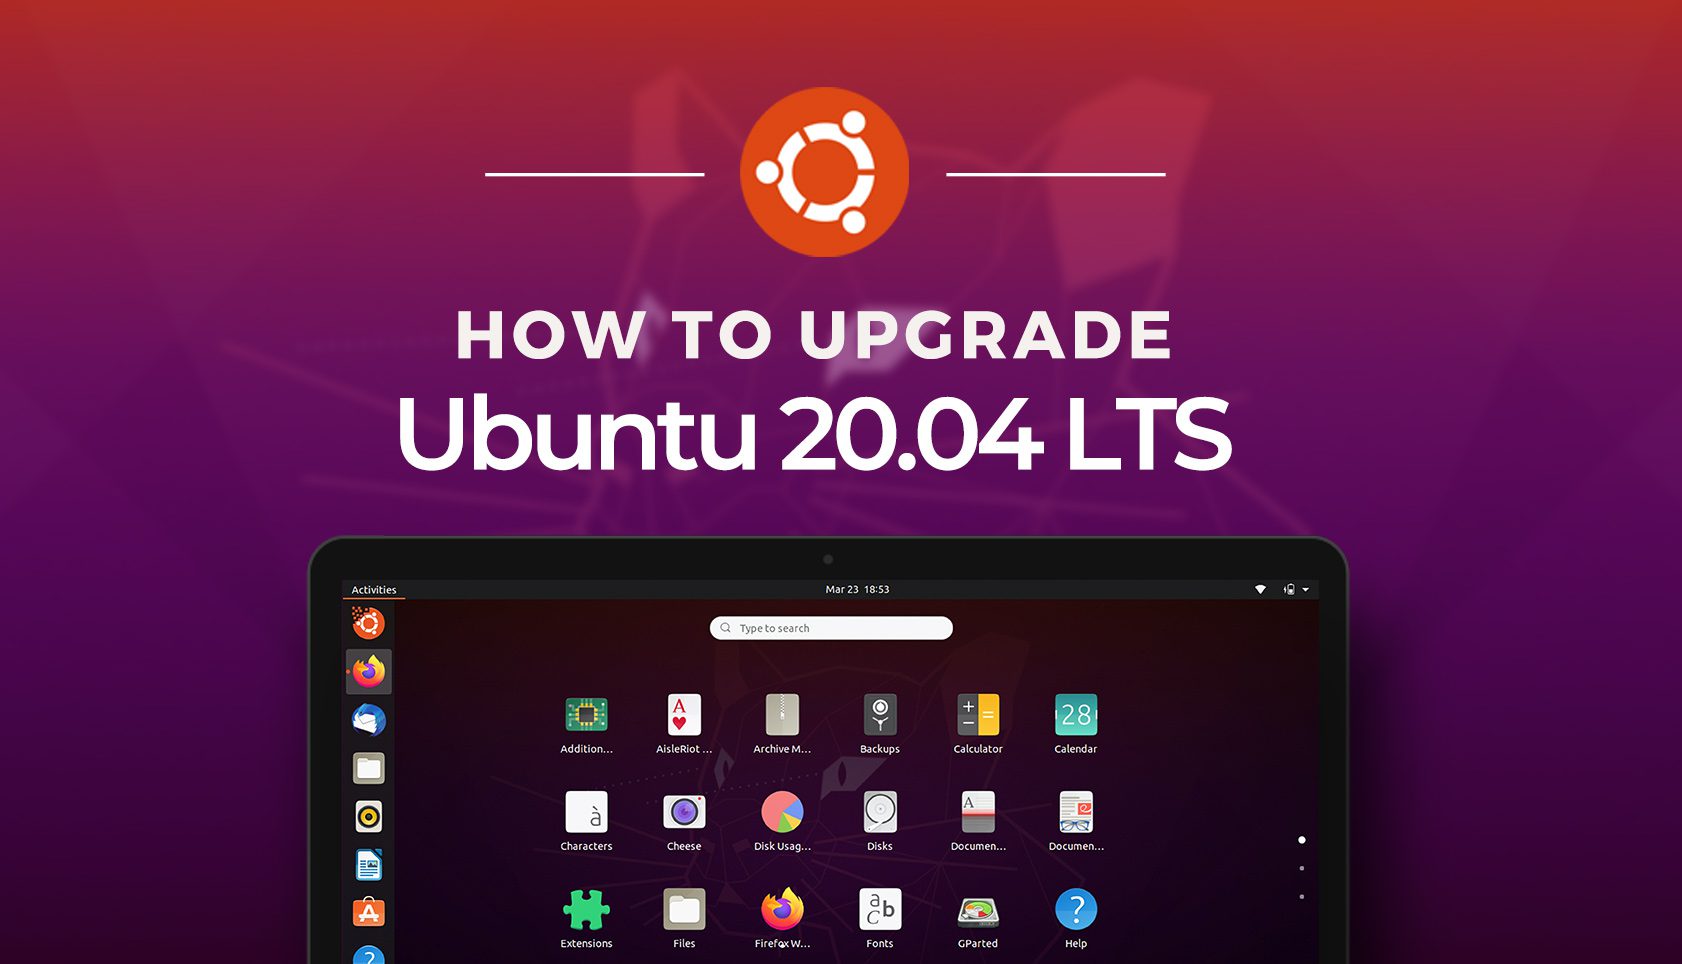 Nâng cấp Ubuntu 18.04 lên Ubuntu 20.04